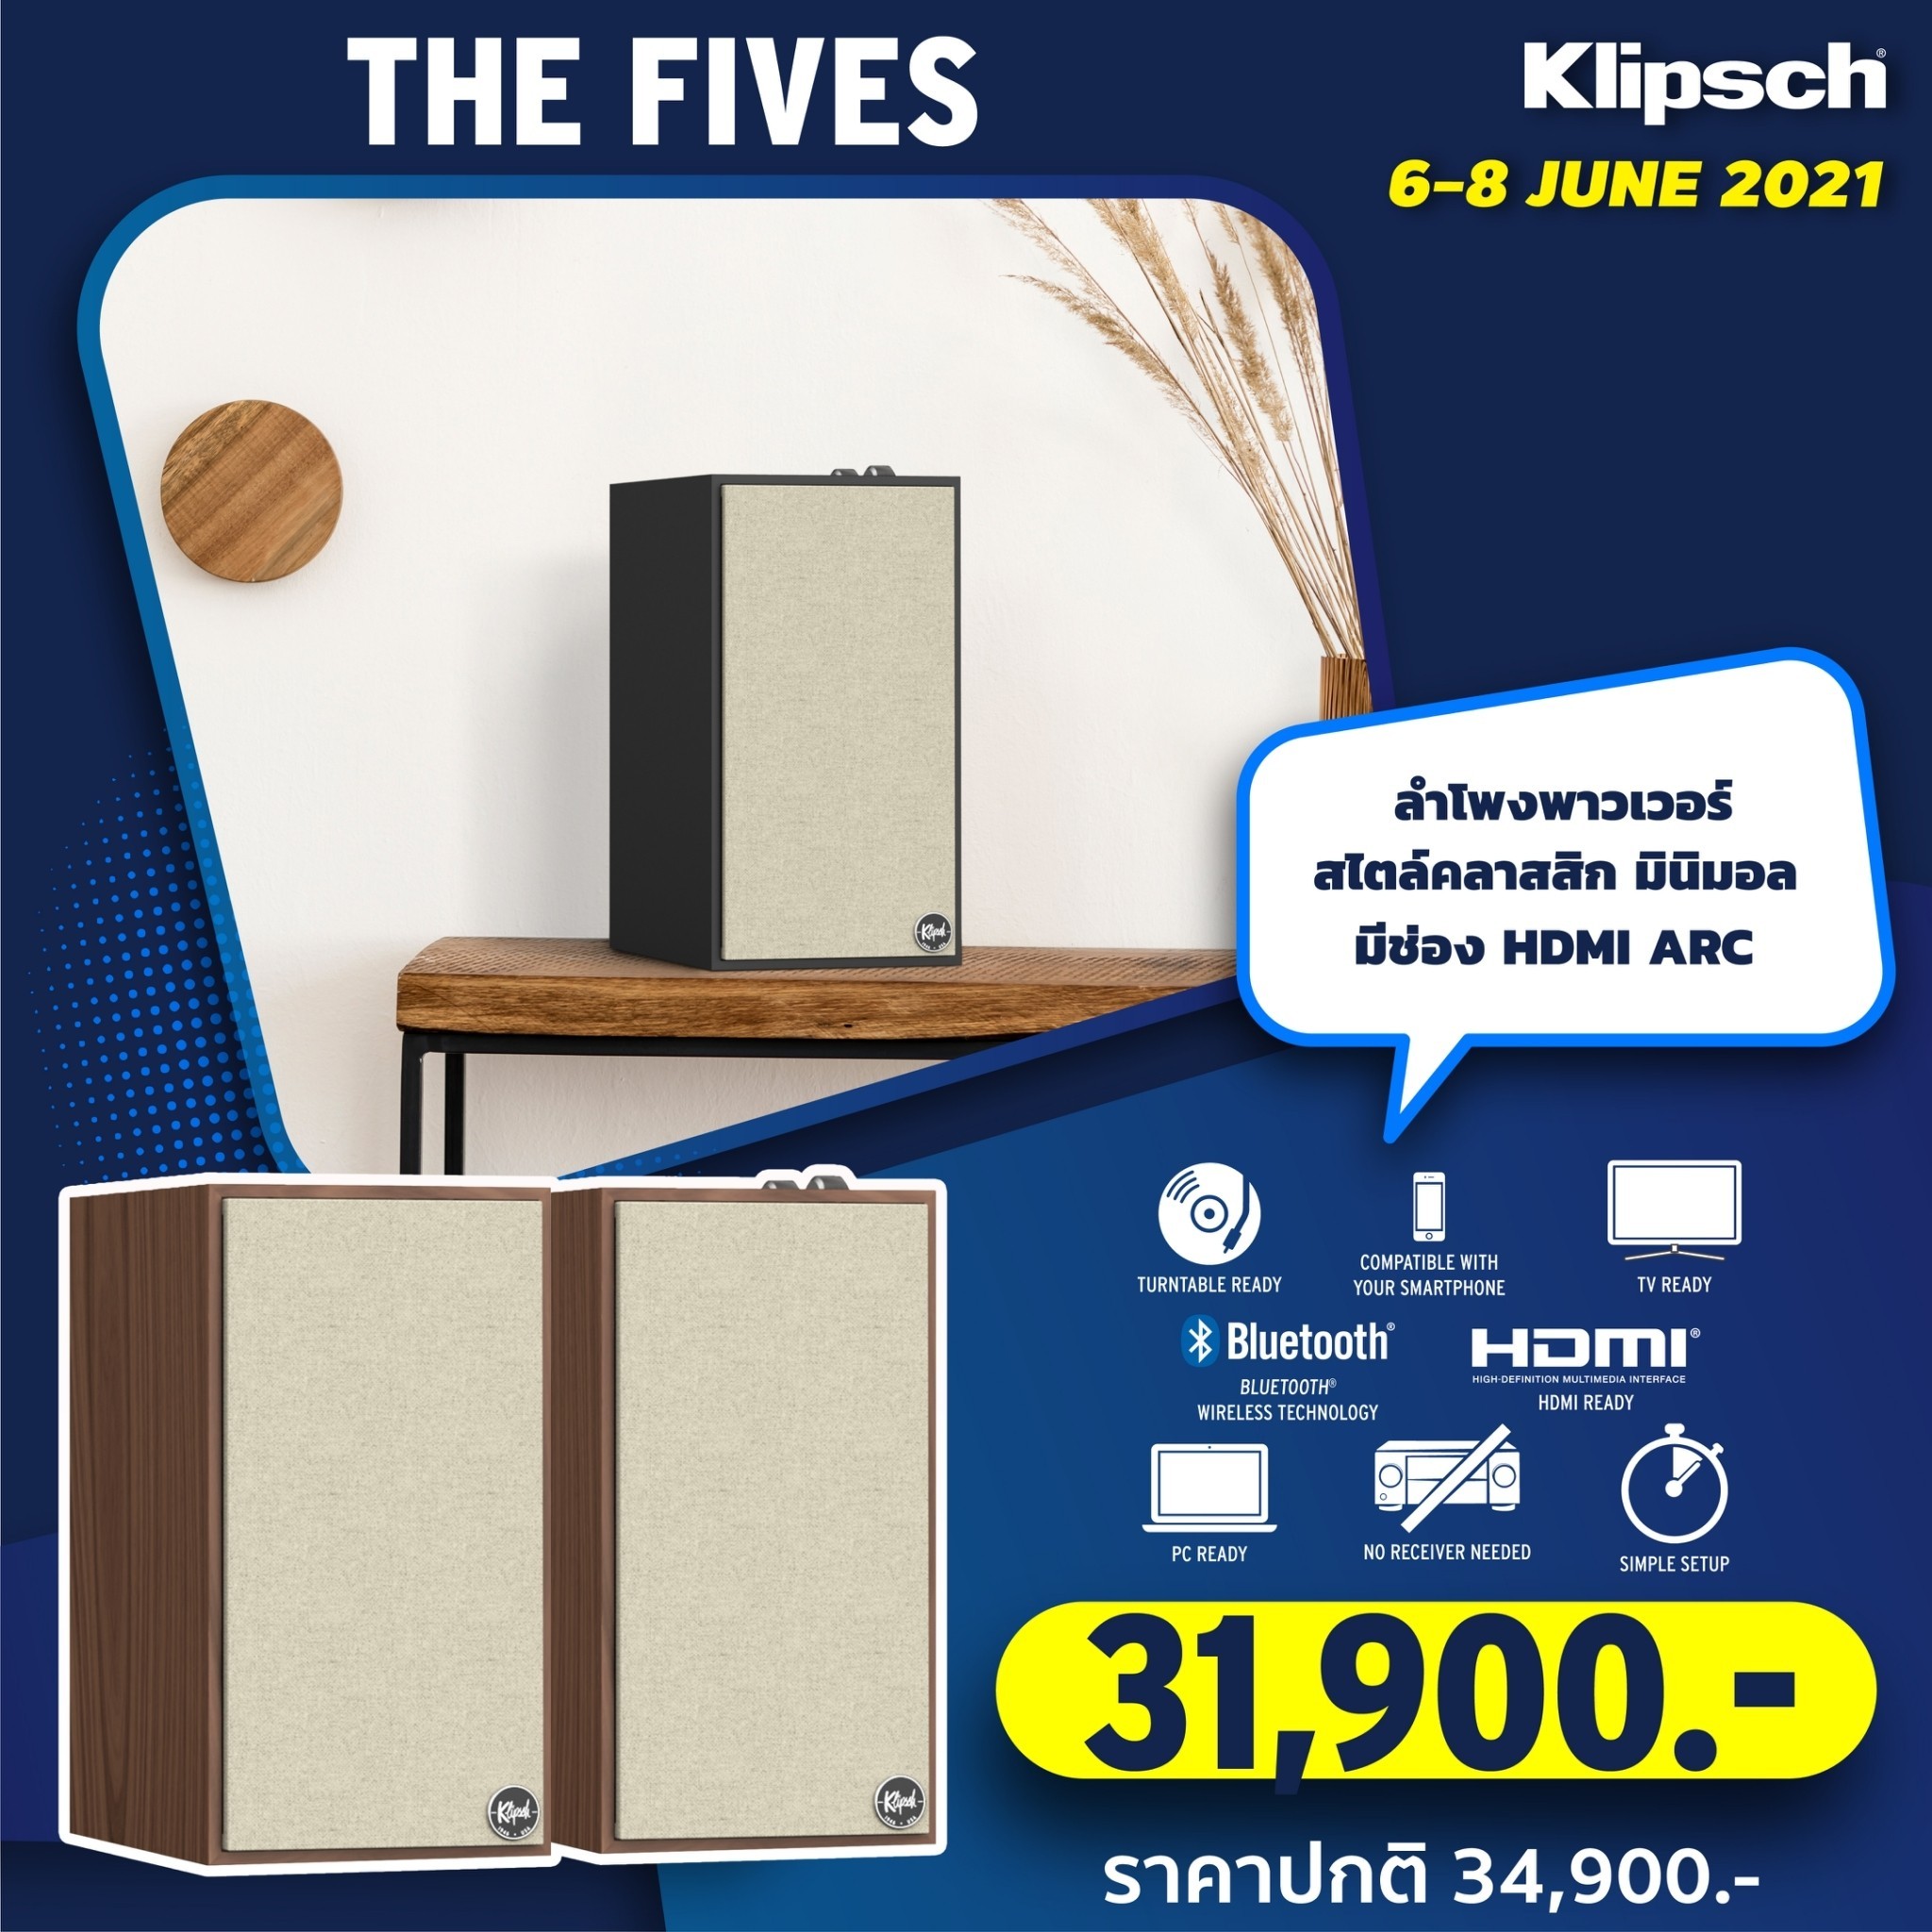 KLIPSCH THE FIVES ลำโพงโฮมเธียเตอร์ 4.5 นิ้ว (สินค้าใหม่แกะกล่อง ของแท้100%)